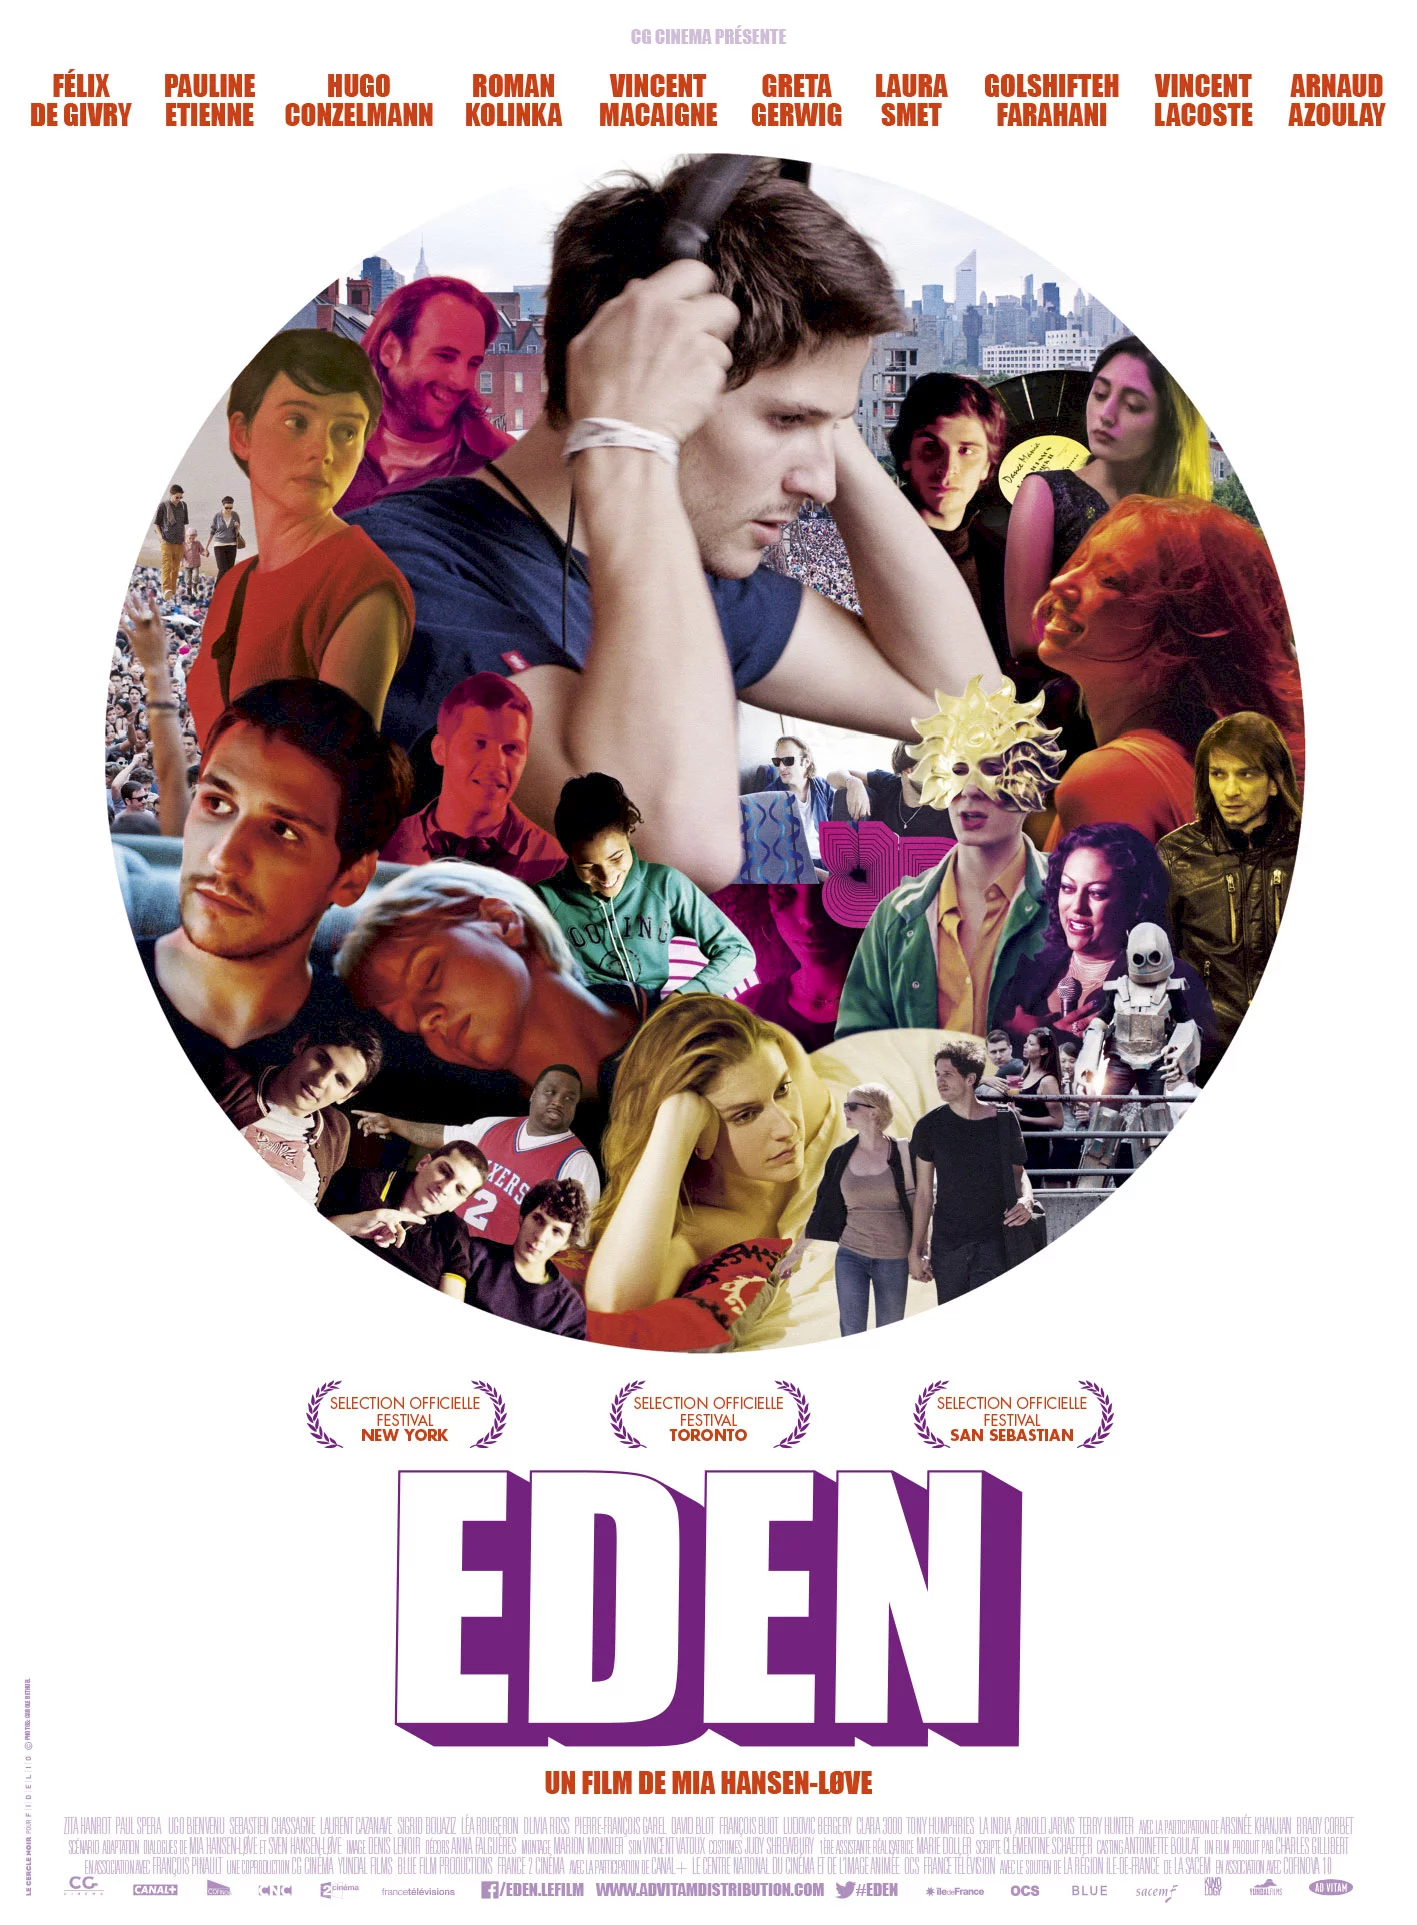 Photo du film : Eden